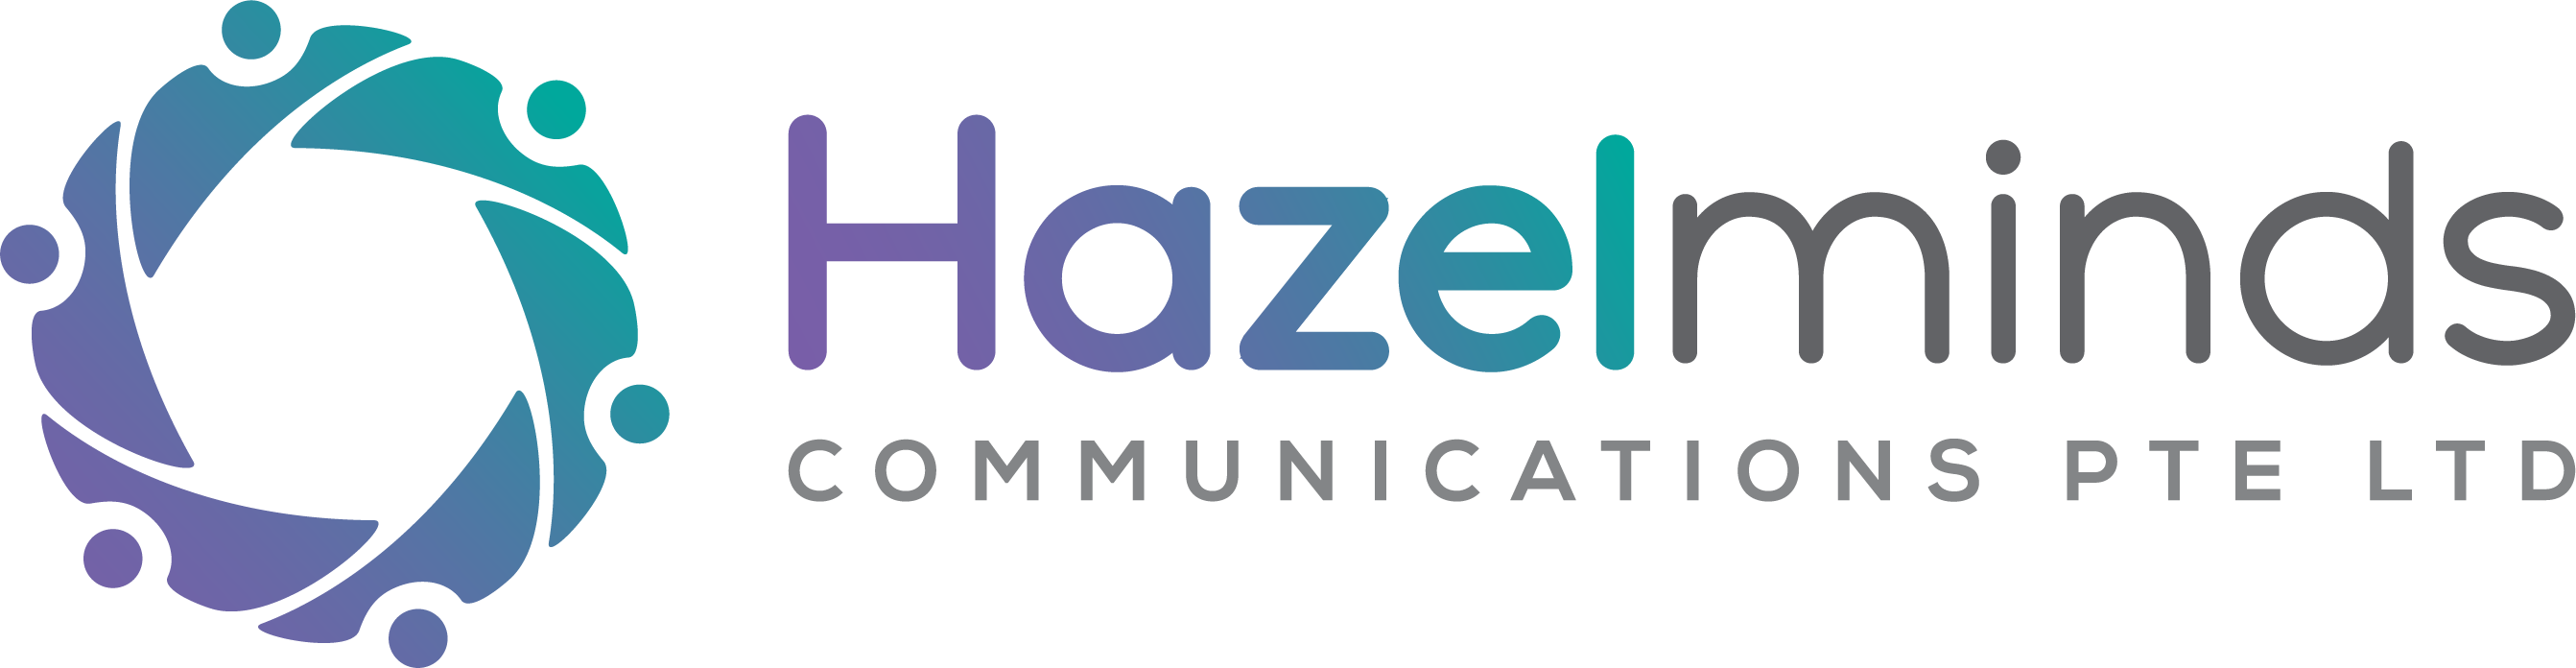 Hazelminds Communications